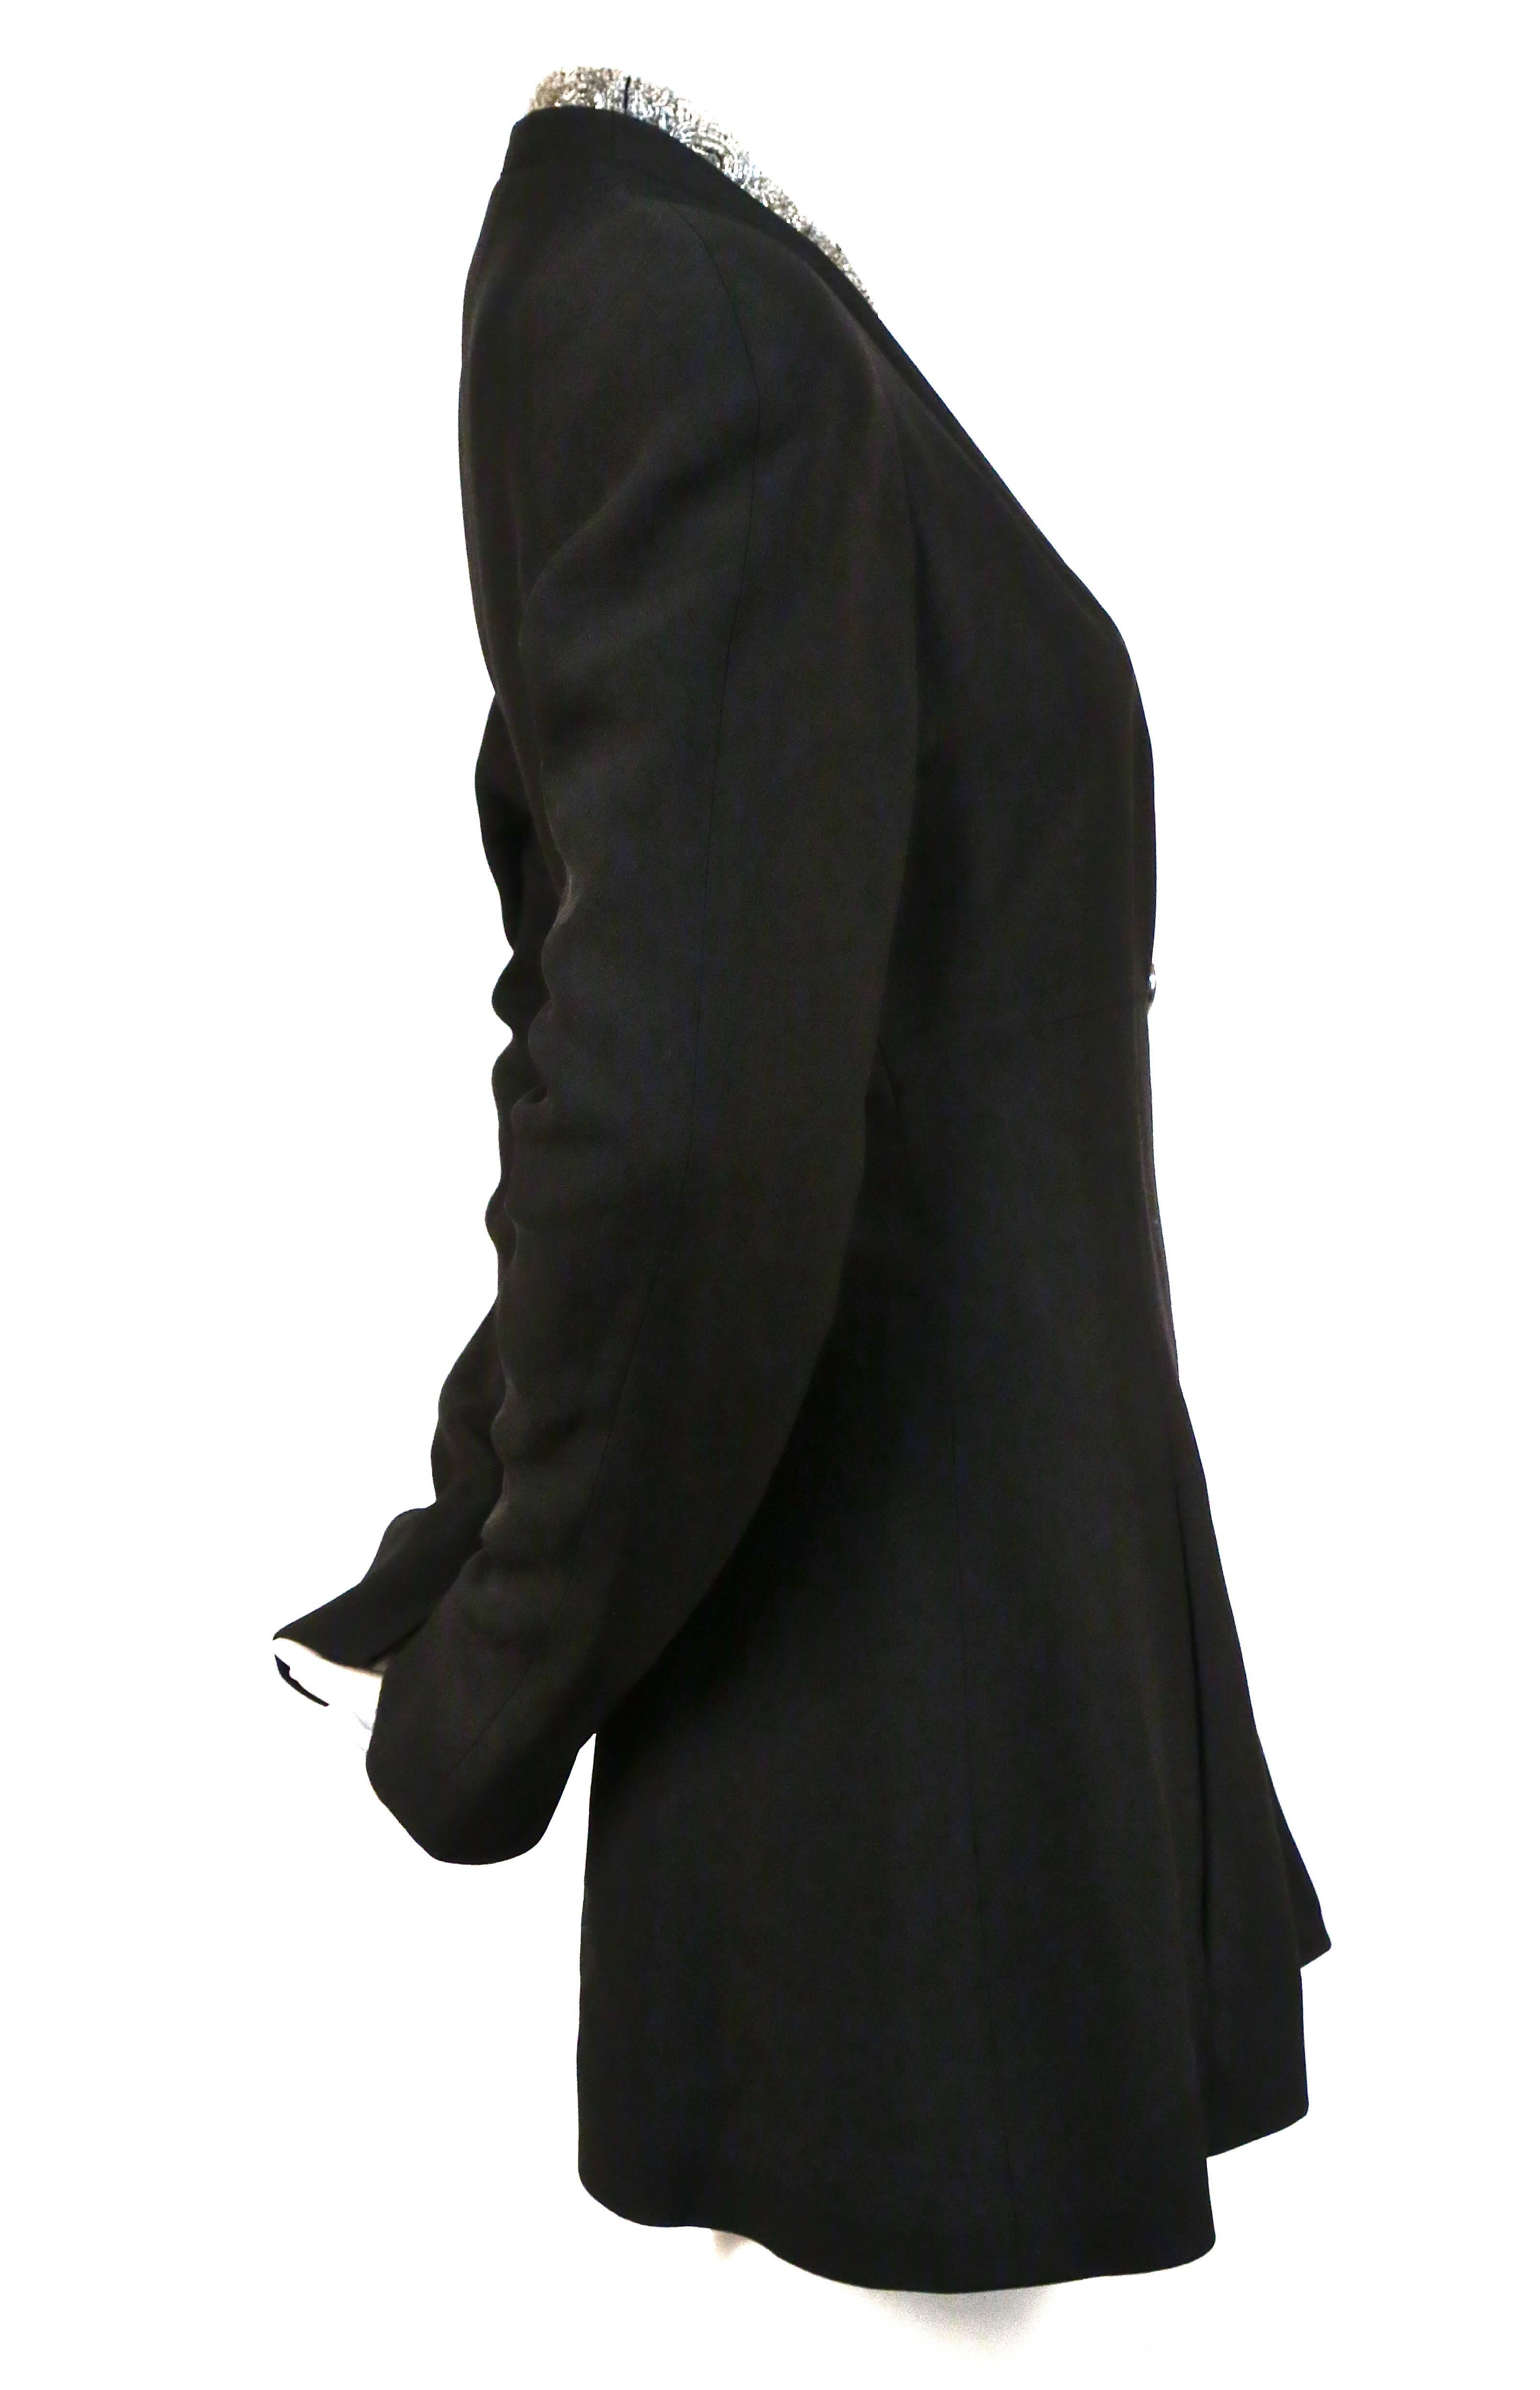 Black KARL LAGERFELD jacket with peplum hem and beaded collar